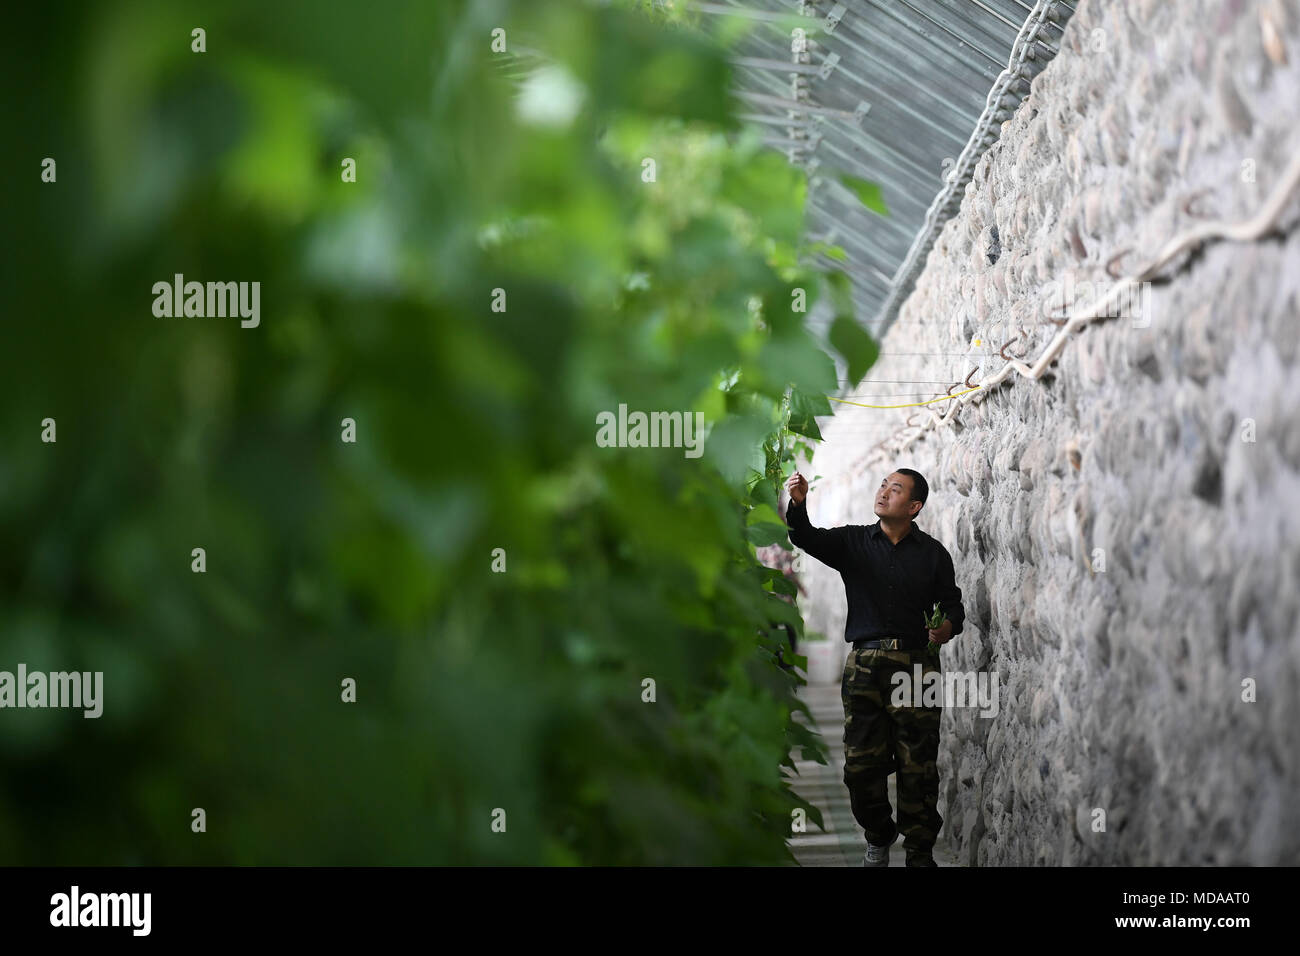 180419) -- JIUQUAN, April 19, 2018 (Xinhua) -- Farmer Fan Lide checks  vegetables growing soil-free in a greenhouse of an agricultural garden at  Zongzhai Township of Jiuquan City, northwest China's Gansu Province,